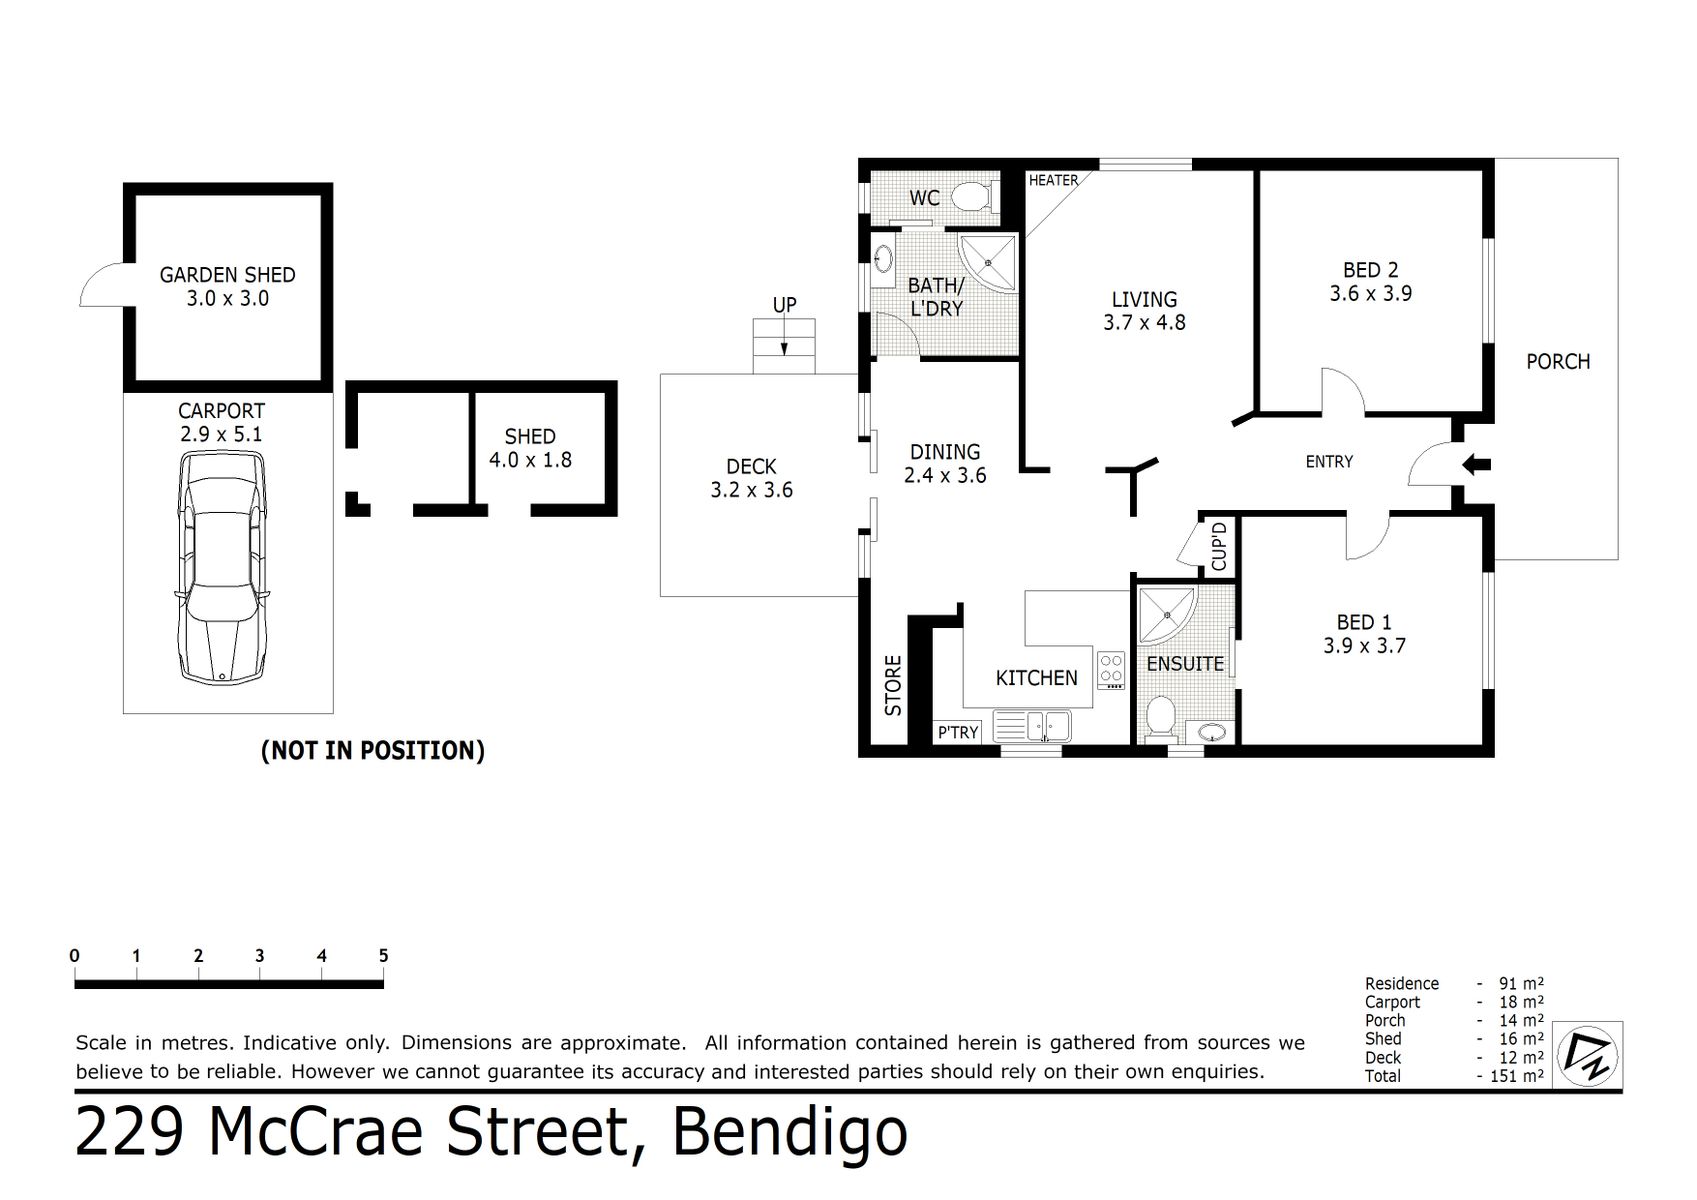 229 McCrae Street Bendigo (21 JUN 2021) 91sqm